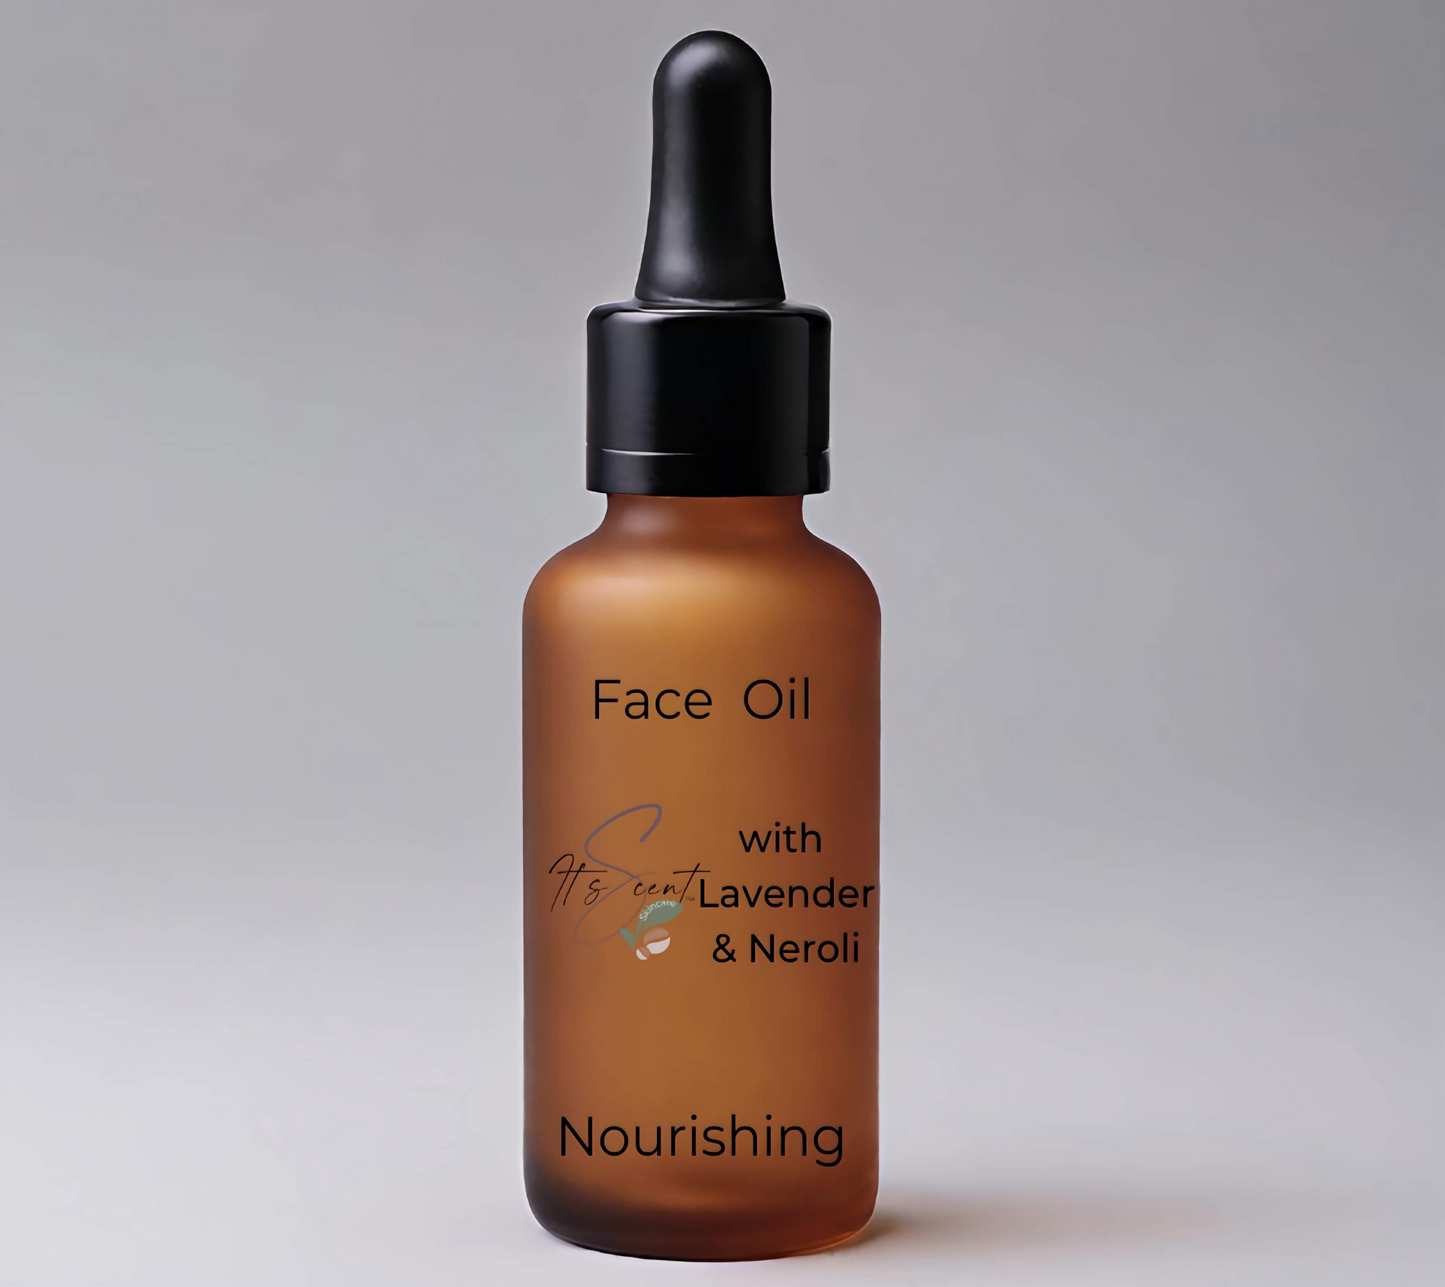 Nourishing Face Serum bottle showcasing luxurious anti-aging skincare formula